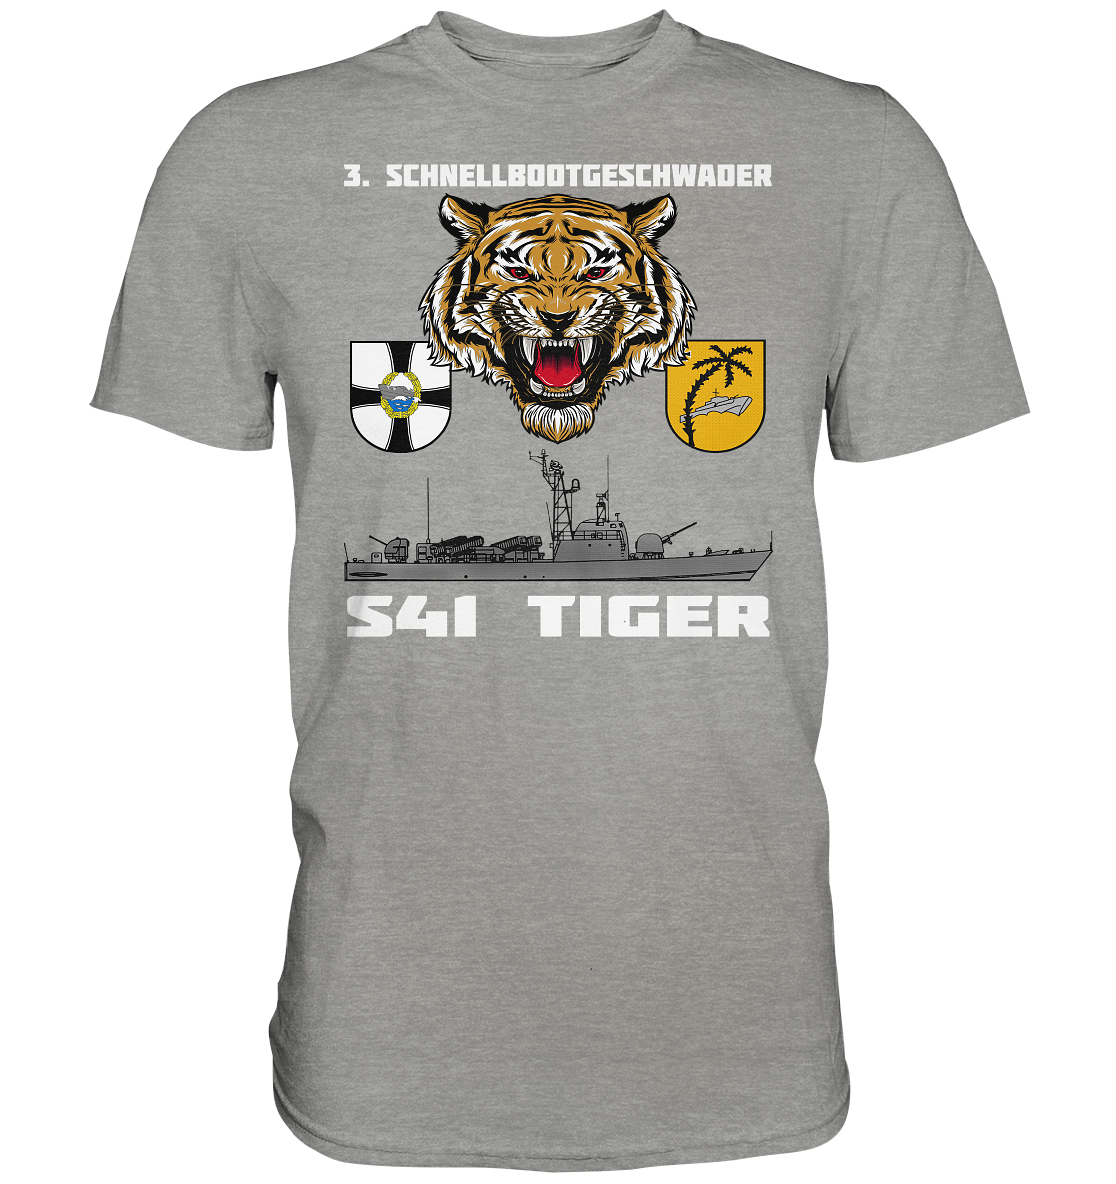 S41 TIGER - Premium Shirt